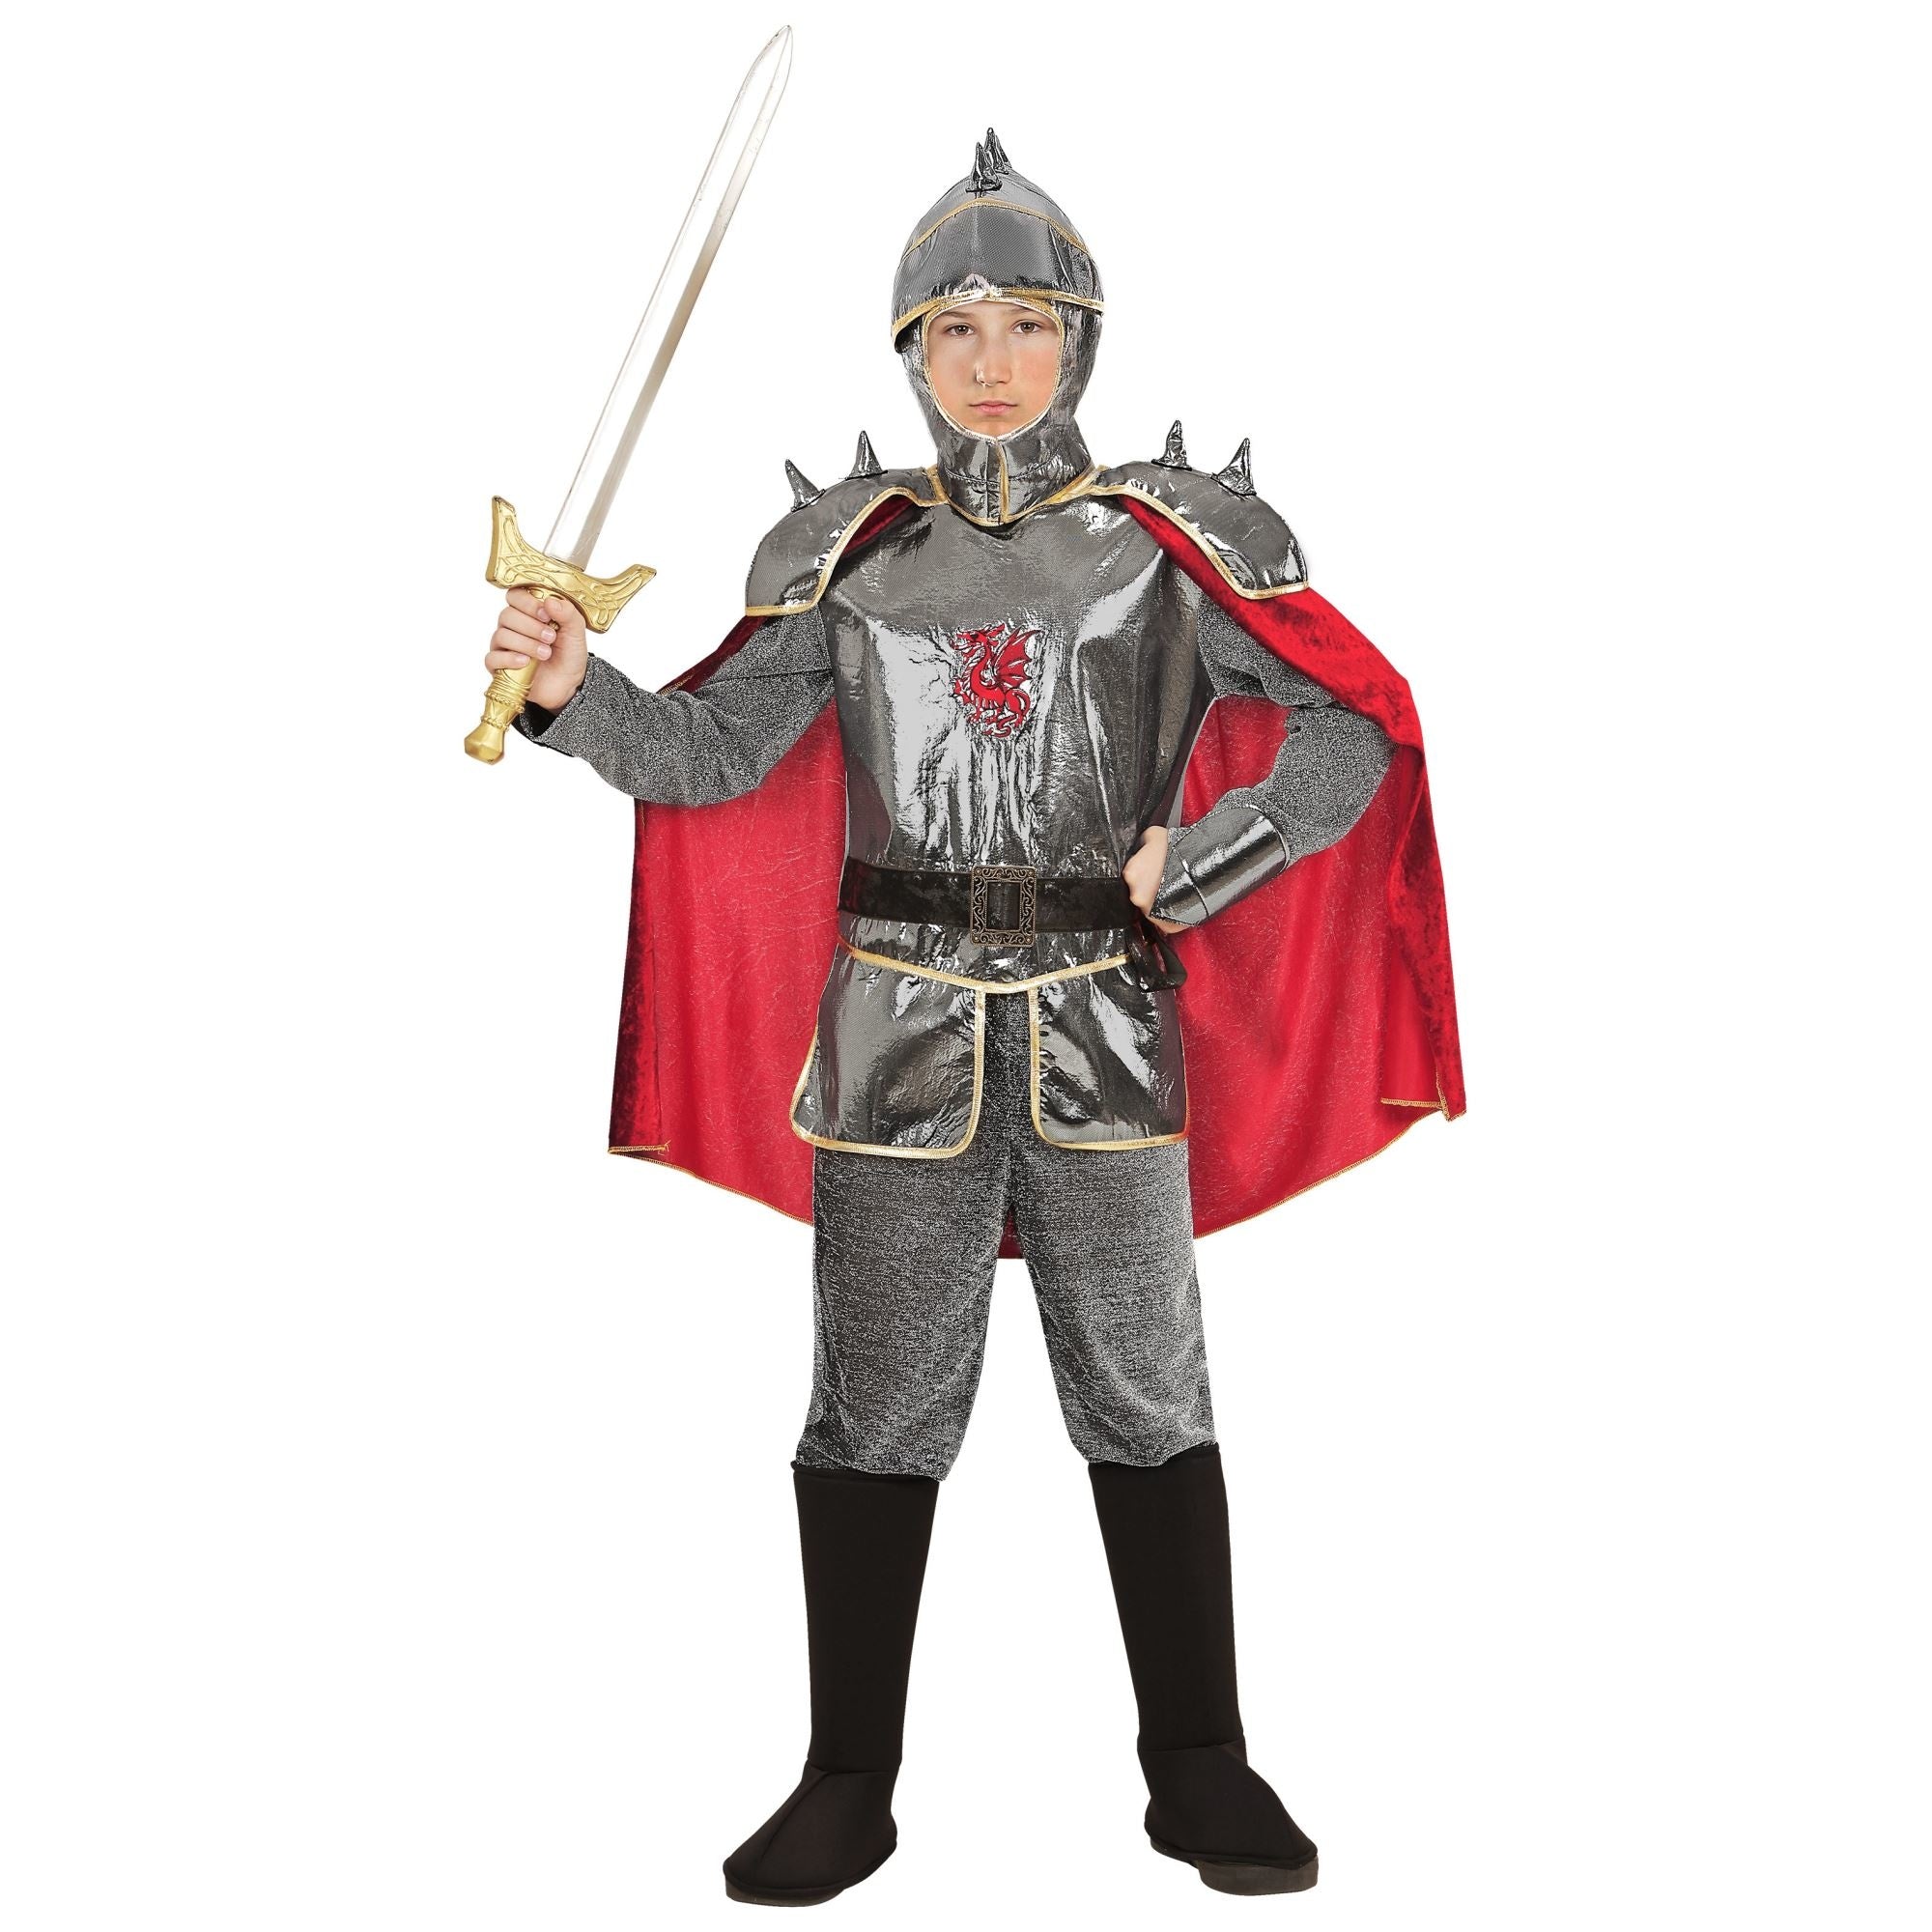 Widmann - Middeleeuwse & Renaissance Strijders Kostuum - Ridder Graniet - Jongen - rood,zilver - Maat 140 - Carnavalskleding - Verkleedkleding